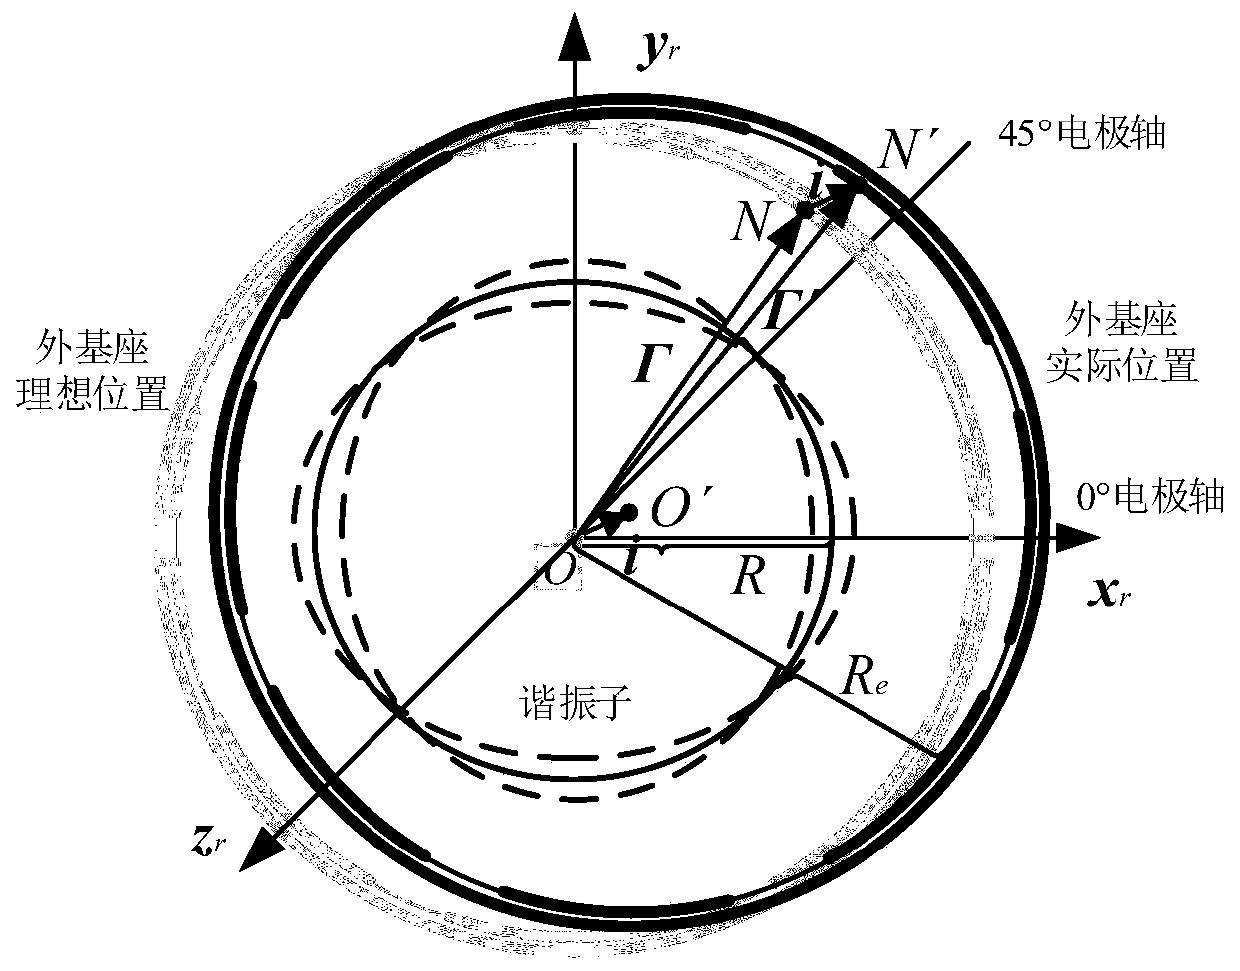 Installation error compensation method for harmonic oscillator and external base of hemispherical resonant gyroscope (HRG)